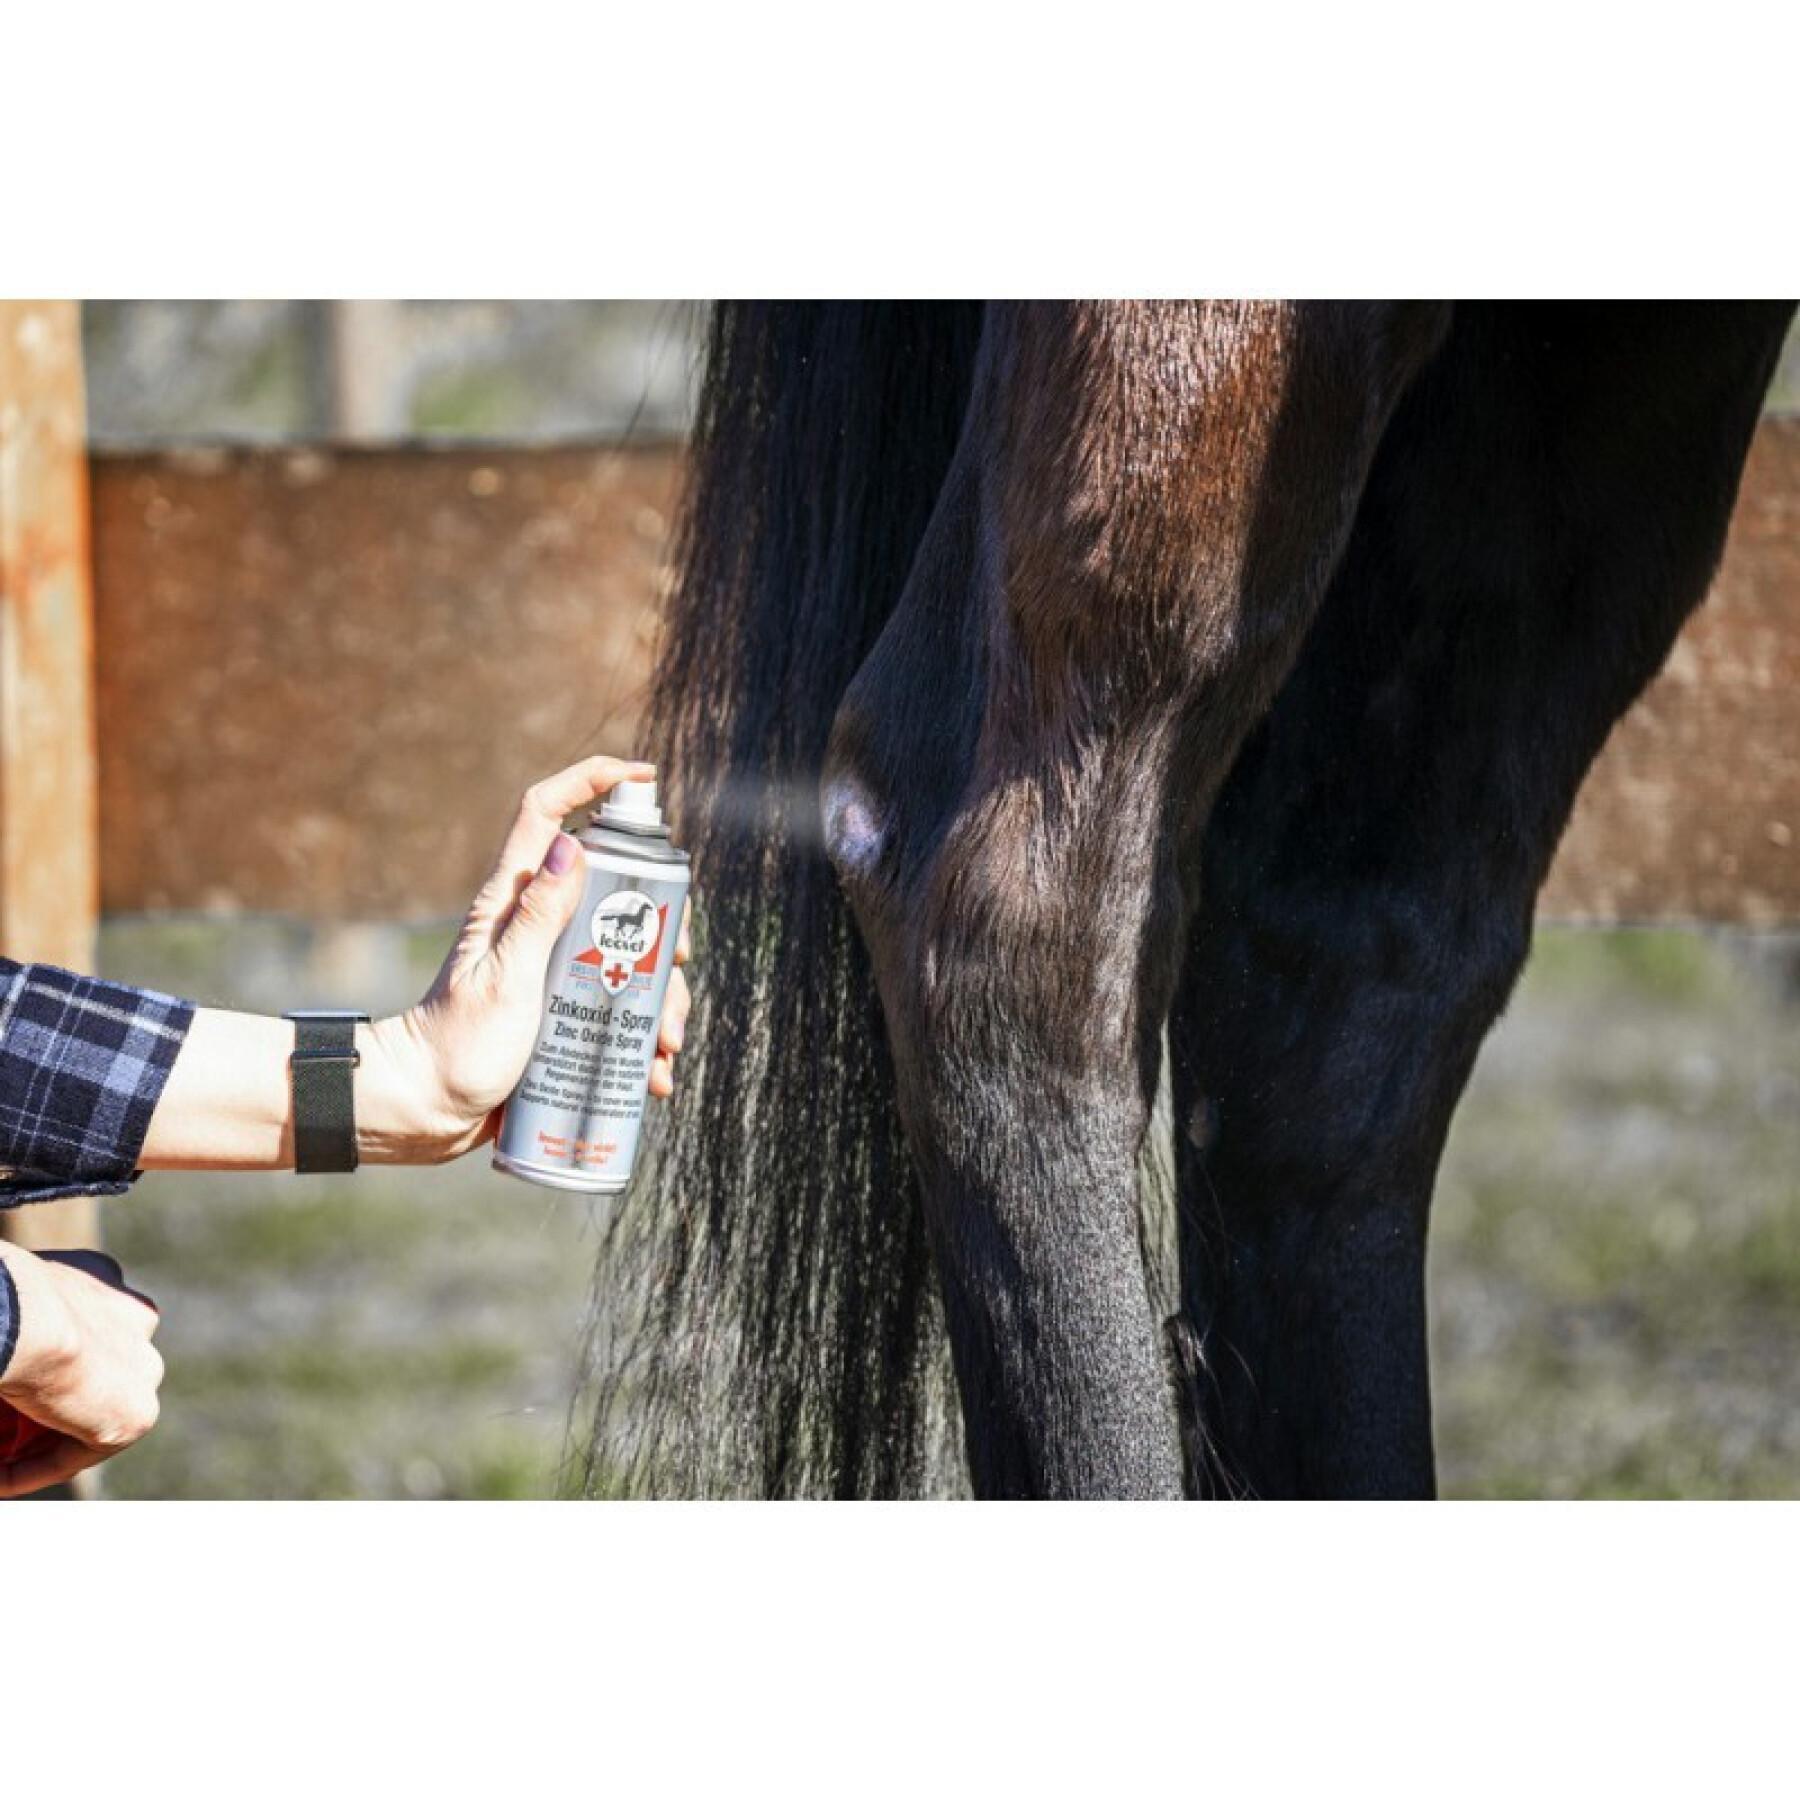 Zinc wound spray for horses Leovet